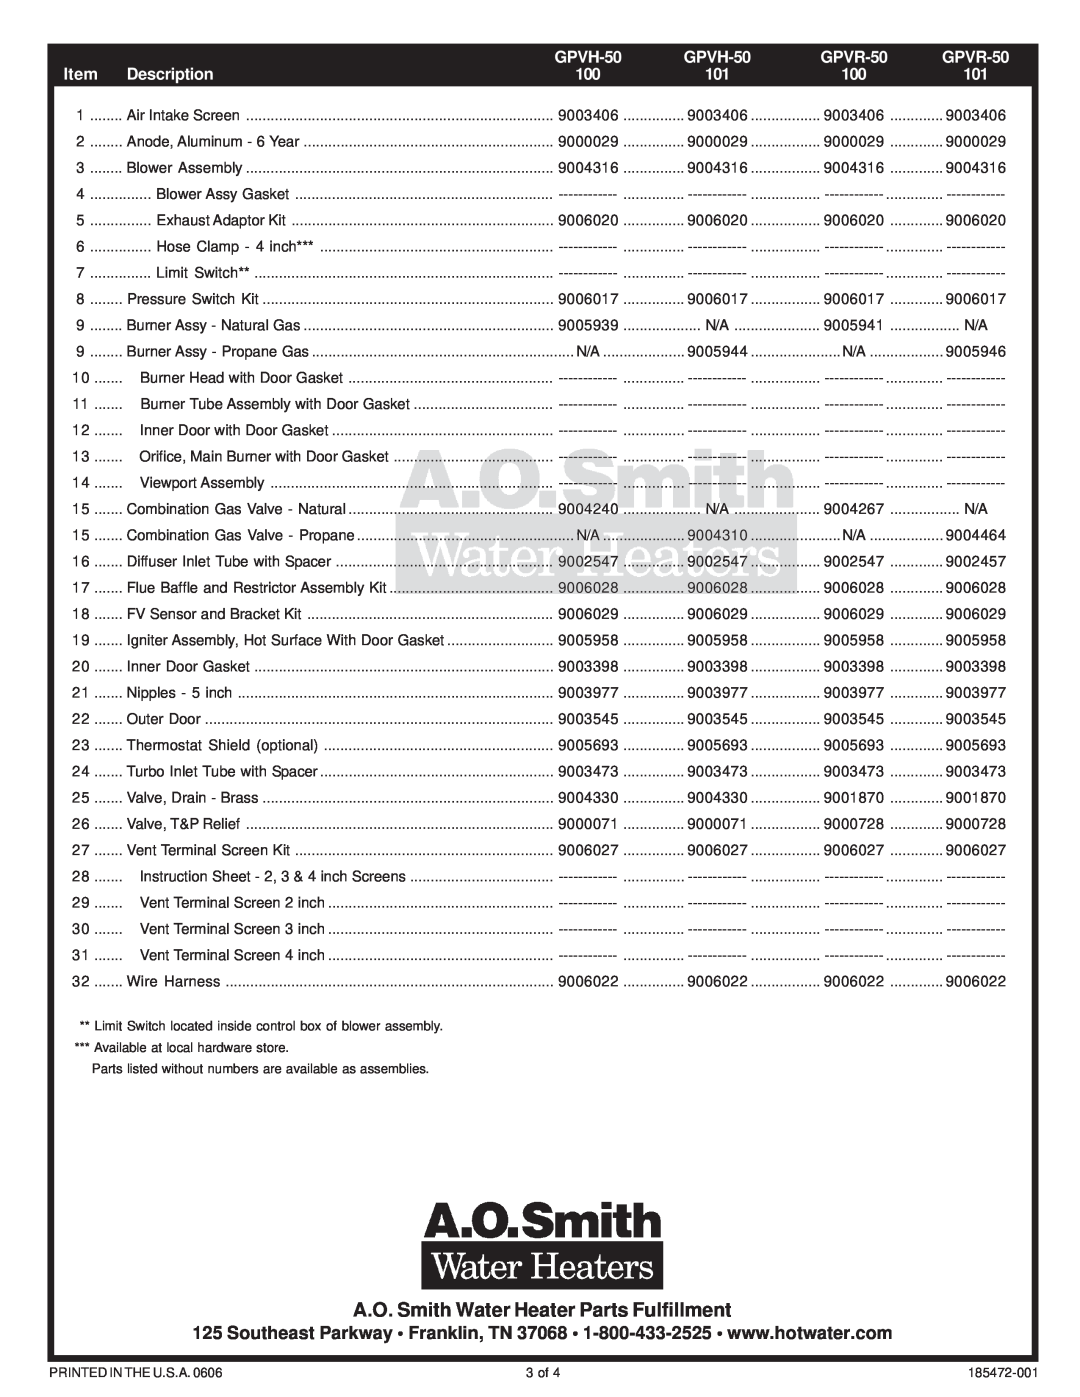 A.O. Smith GPVH 40, GPVR 40 manual GPVH-50, GPVR-50, A.O. Smith Water Heater Parts Fulfillment, Description 